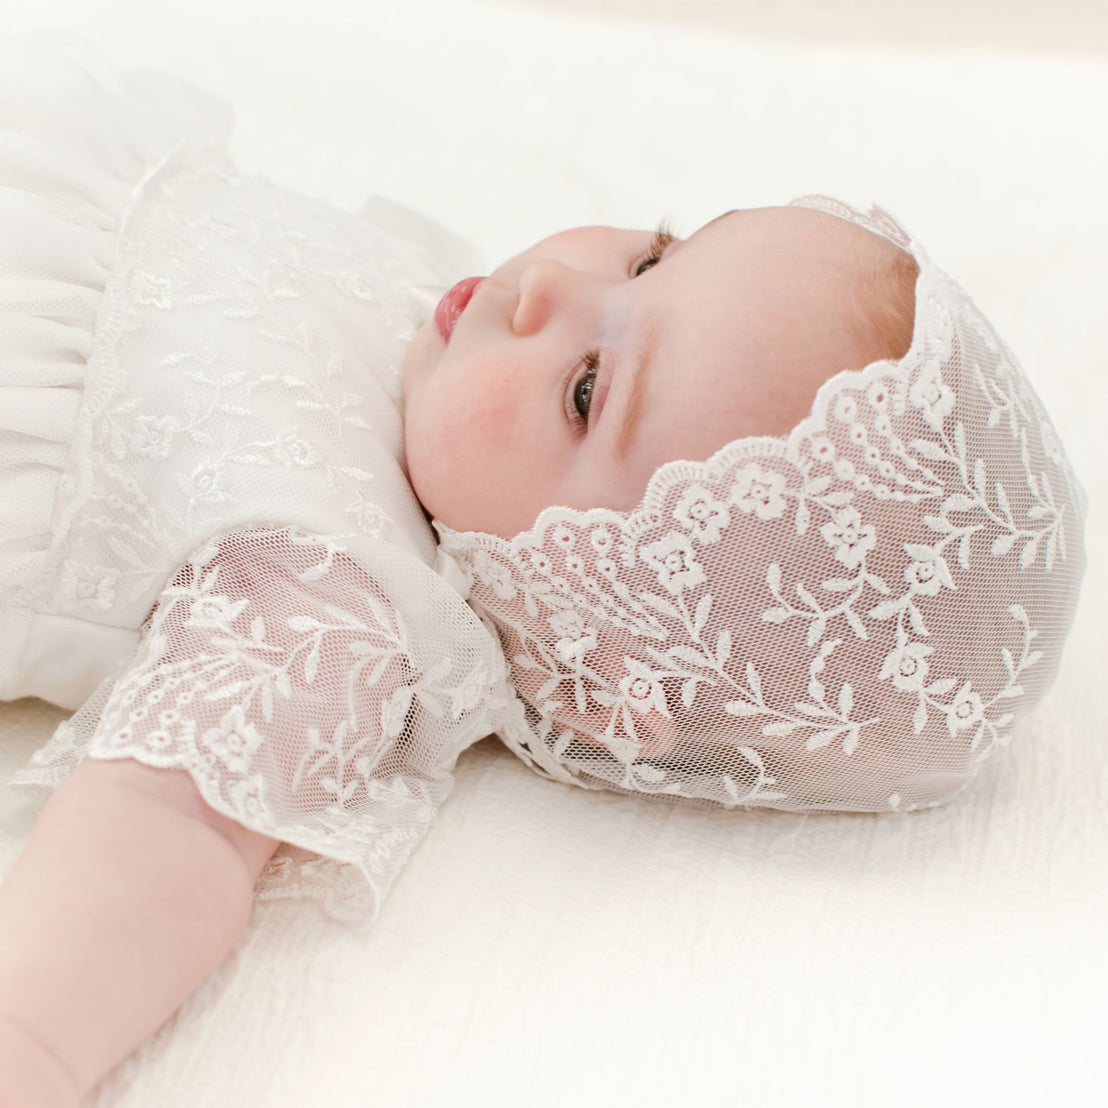 Ella lace bonnet on sleeping baby girl